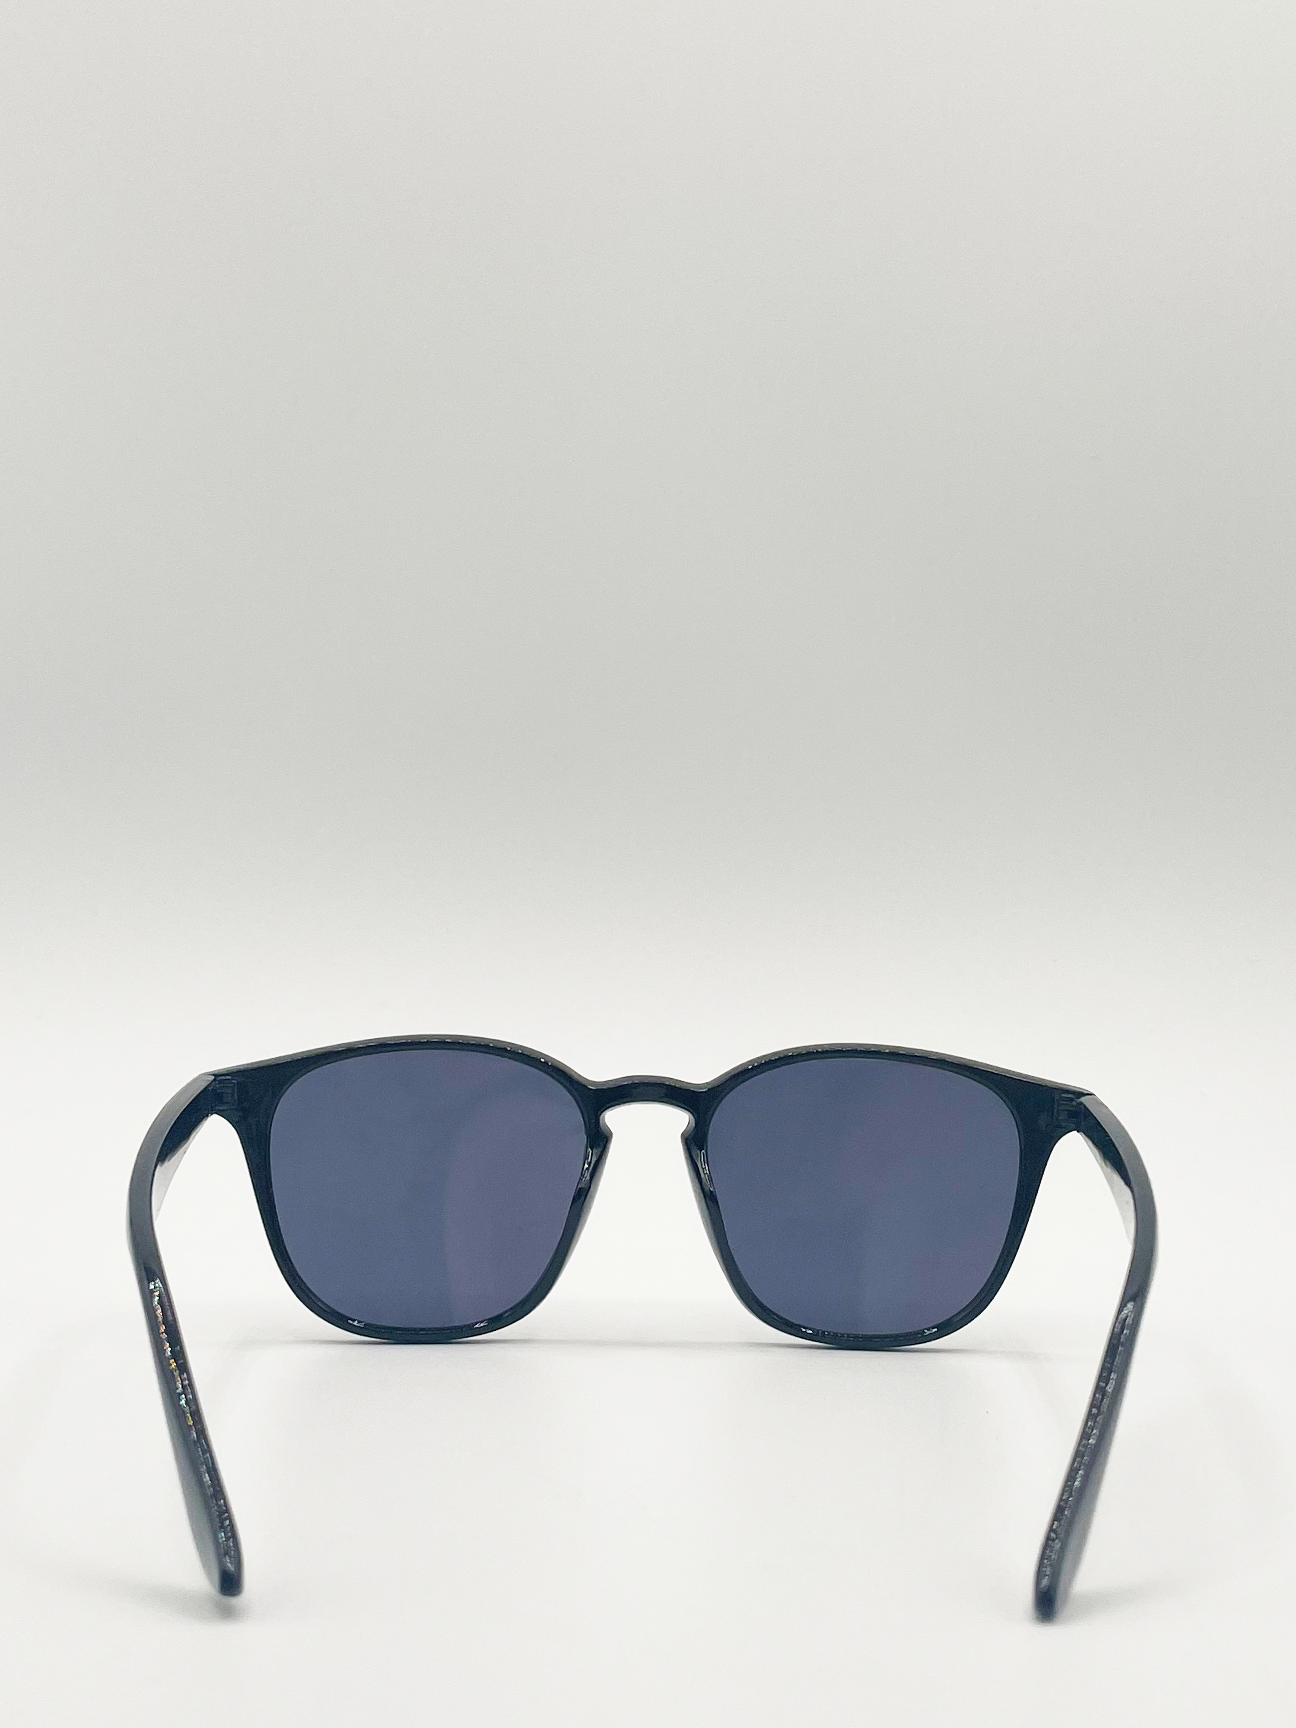 Classic Black Wayfarer Style Sunglasses